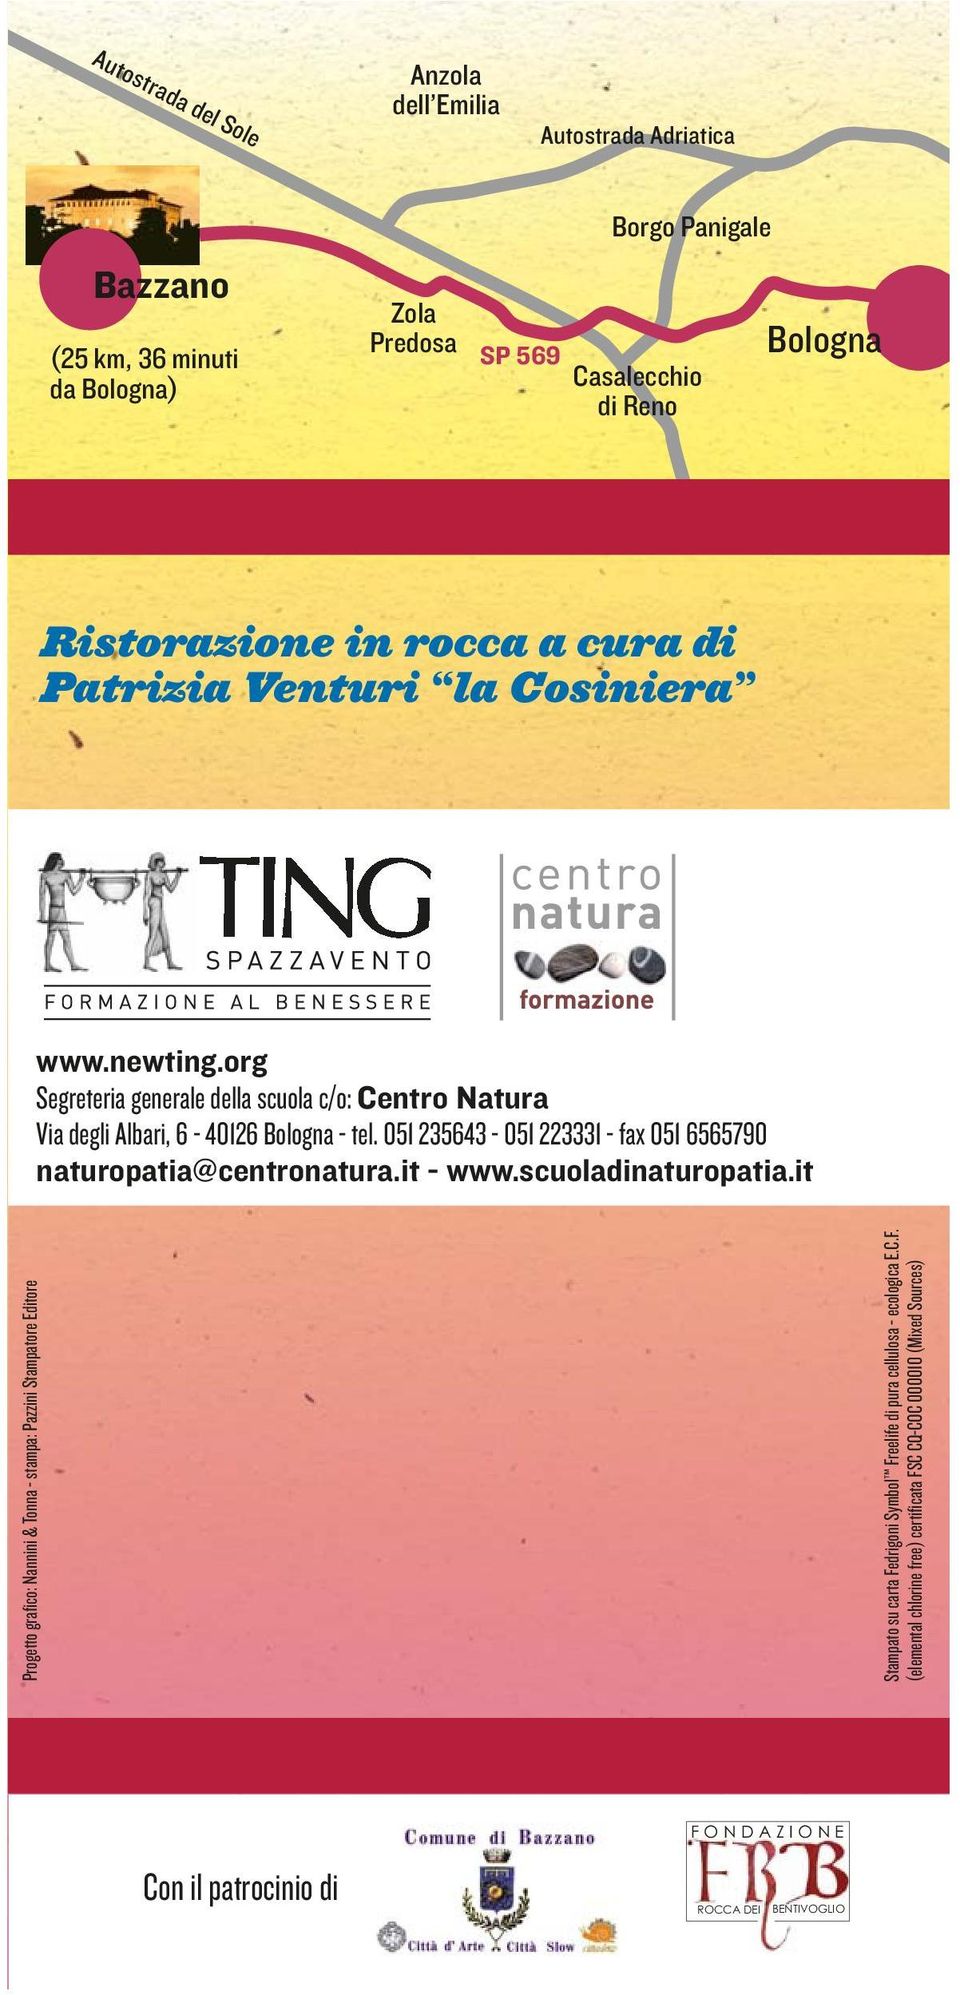 051 235643-051 223331 - fax 051 6565790 naturopatia@centronatura.it - www.scuoladinaturopatia.